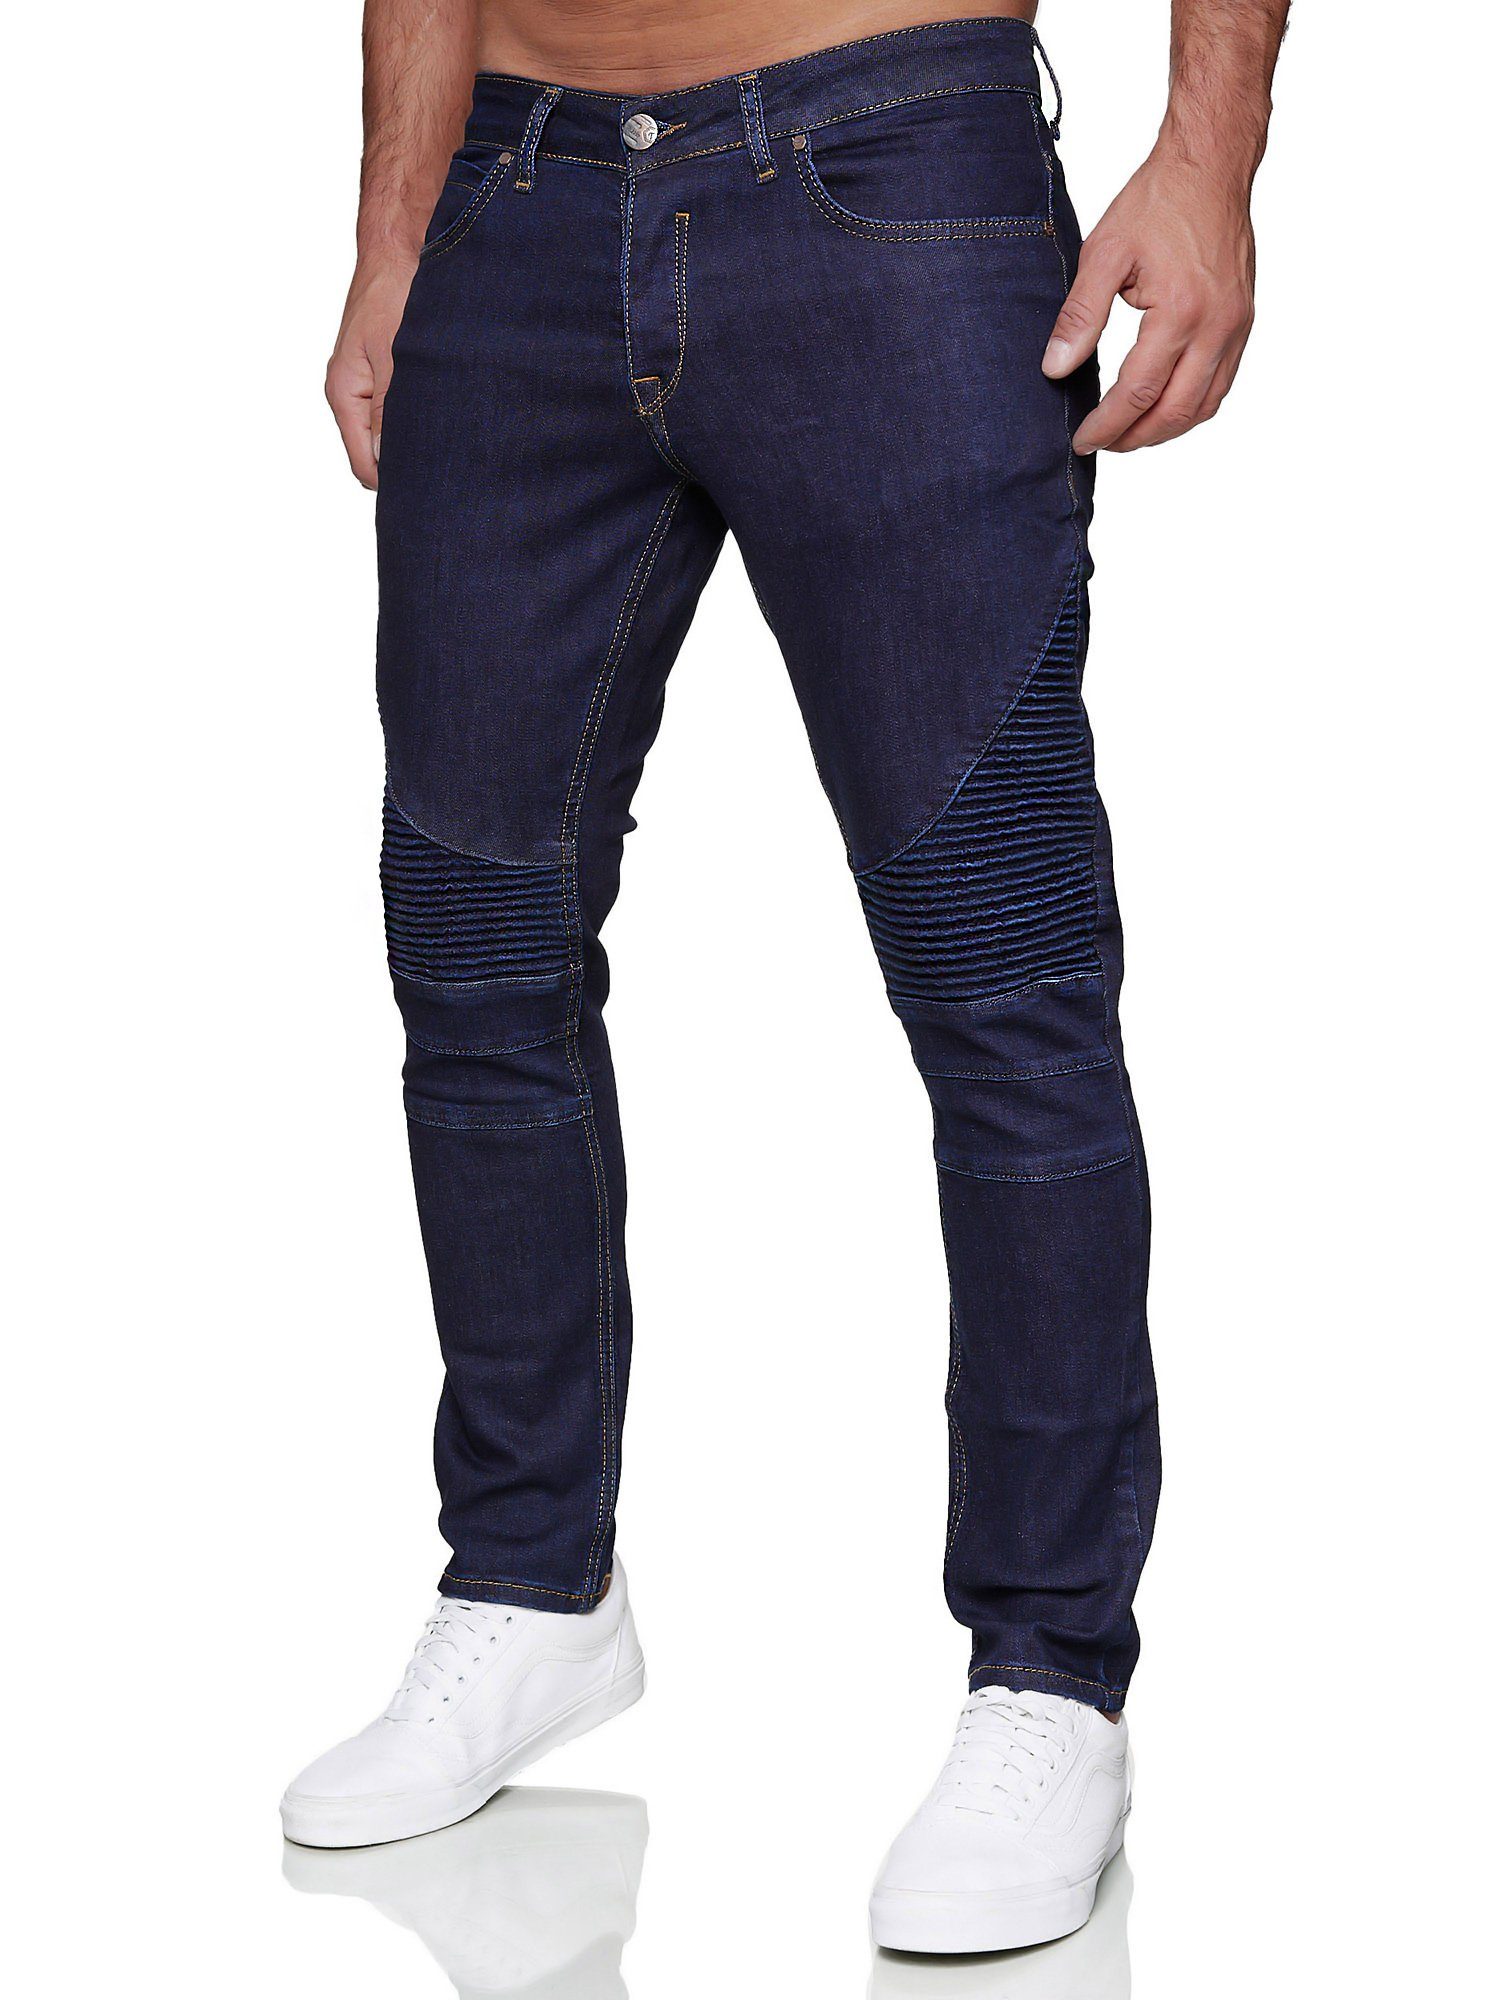 16517 Slim-fit-Jeans cooler dunkelblau Biker-Optik in Tazzio